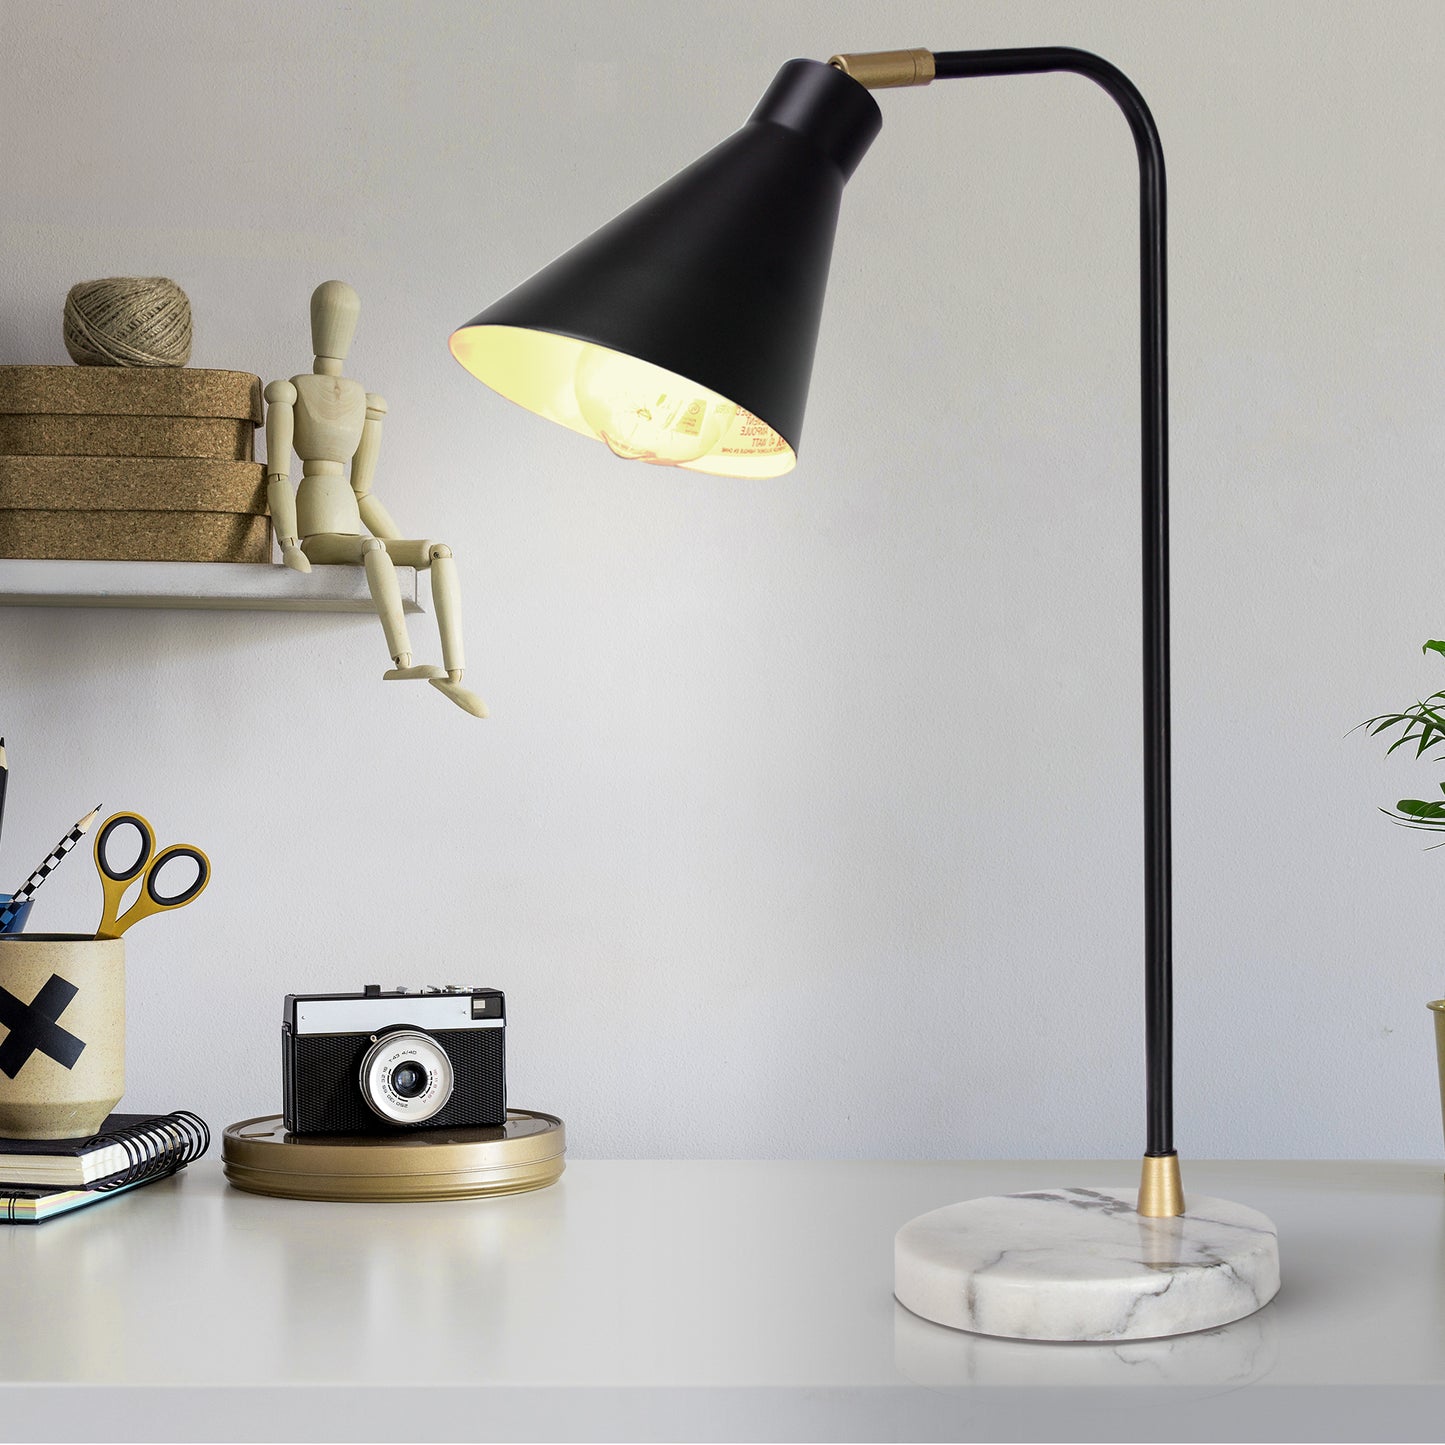 Industrial Adjustable Desk Lamp with Marble Base – Black (21”)